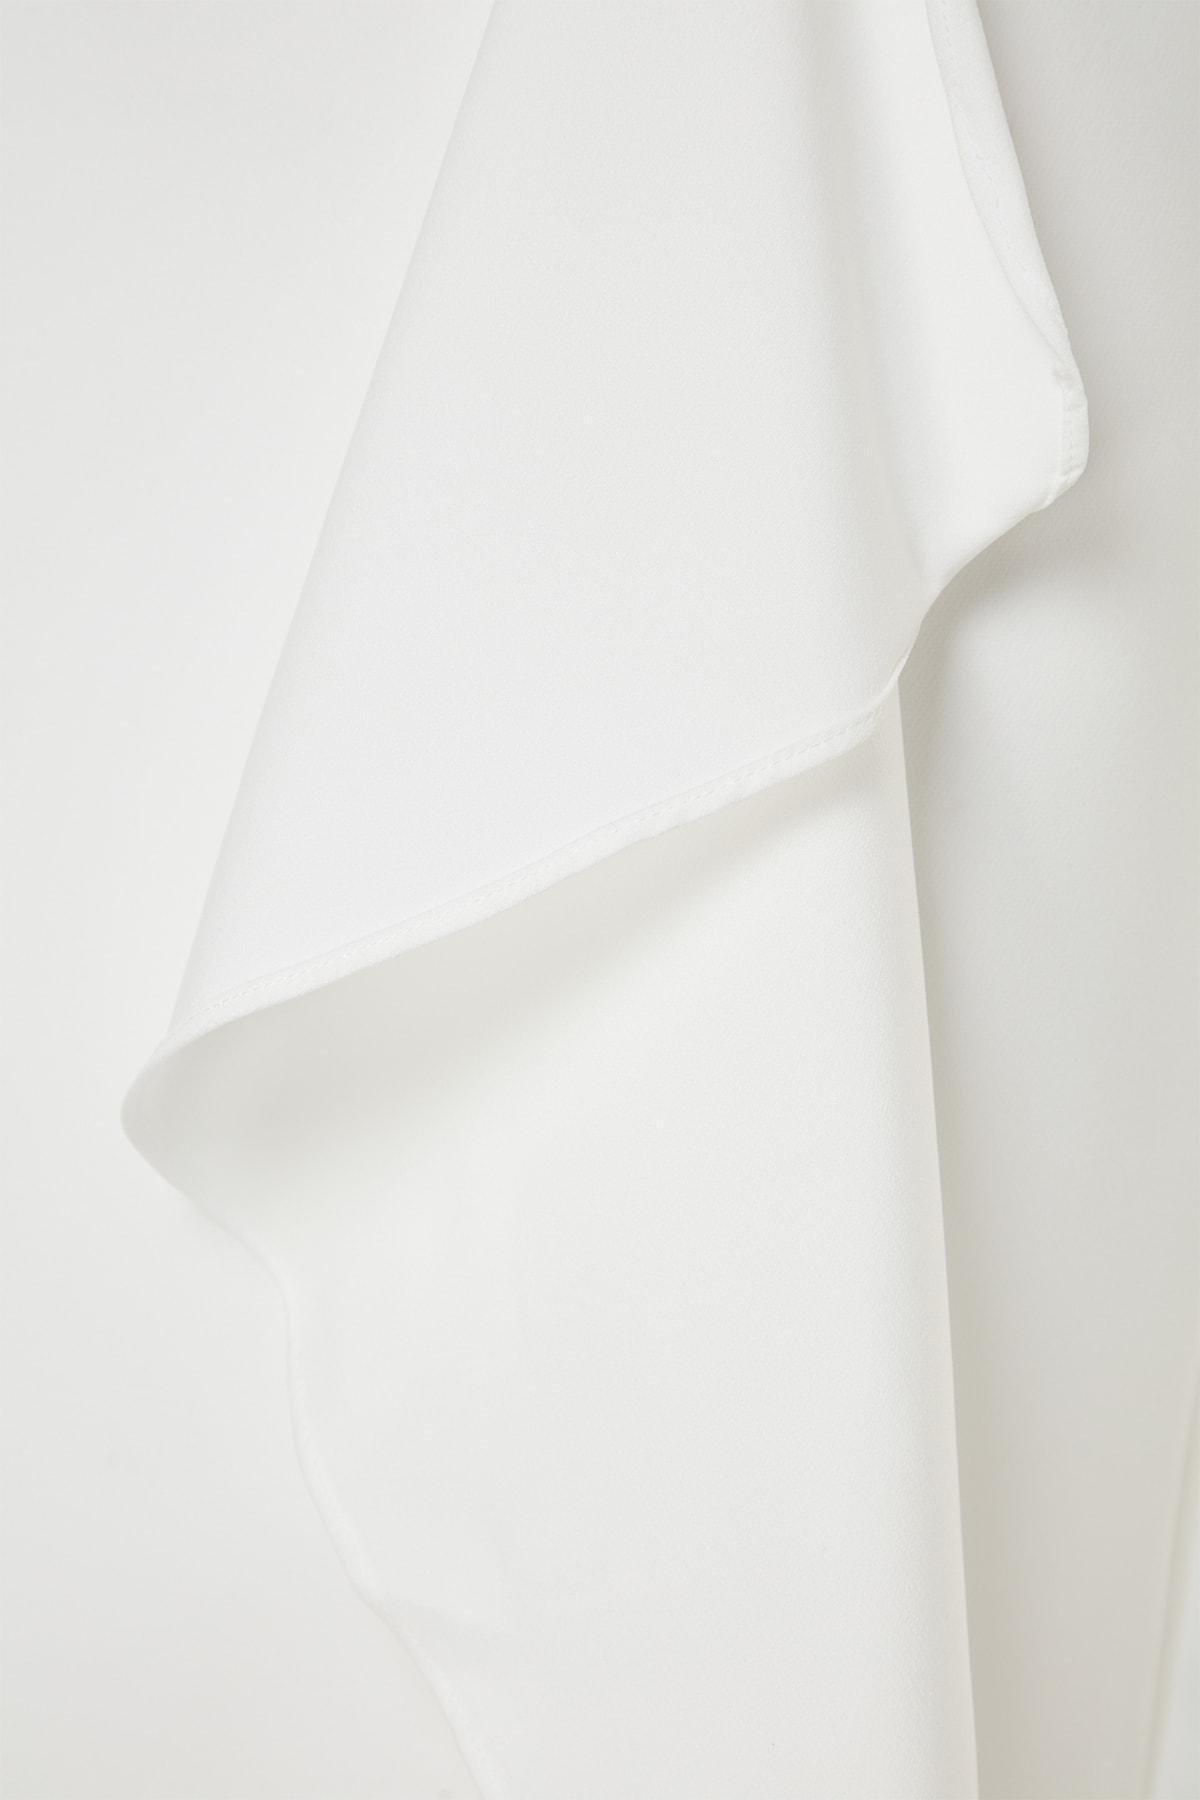 Trendyol - White Strapless Shift Occassionwear Dress